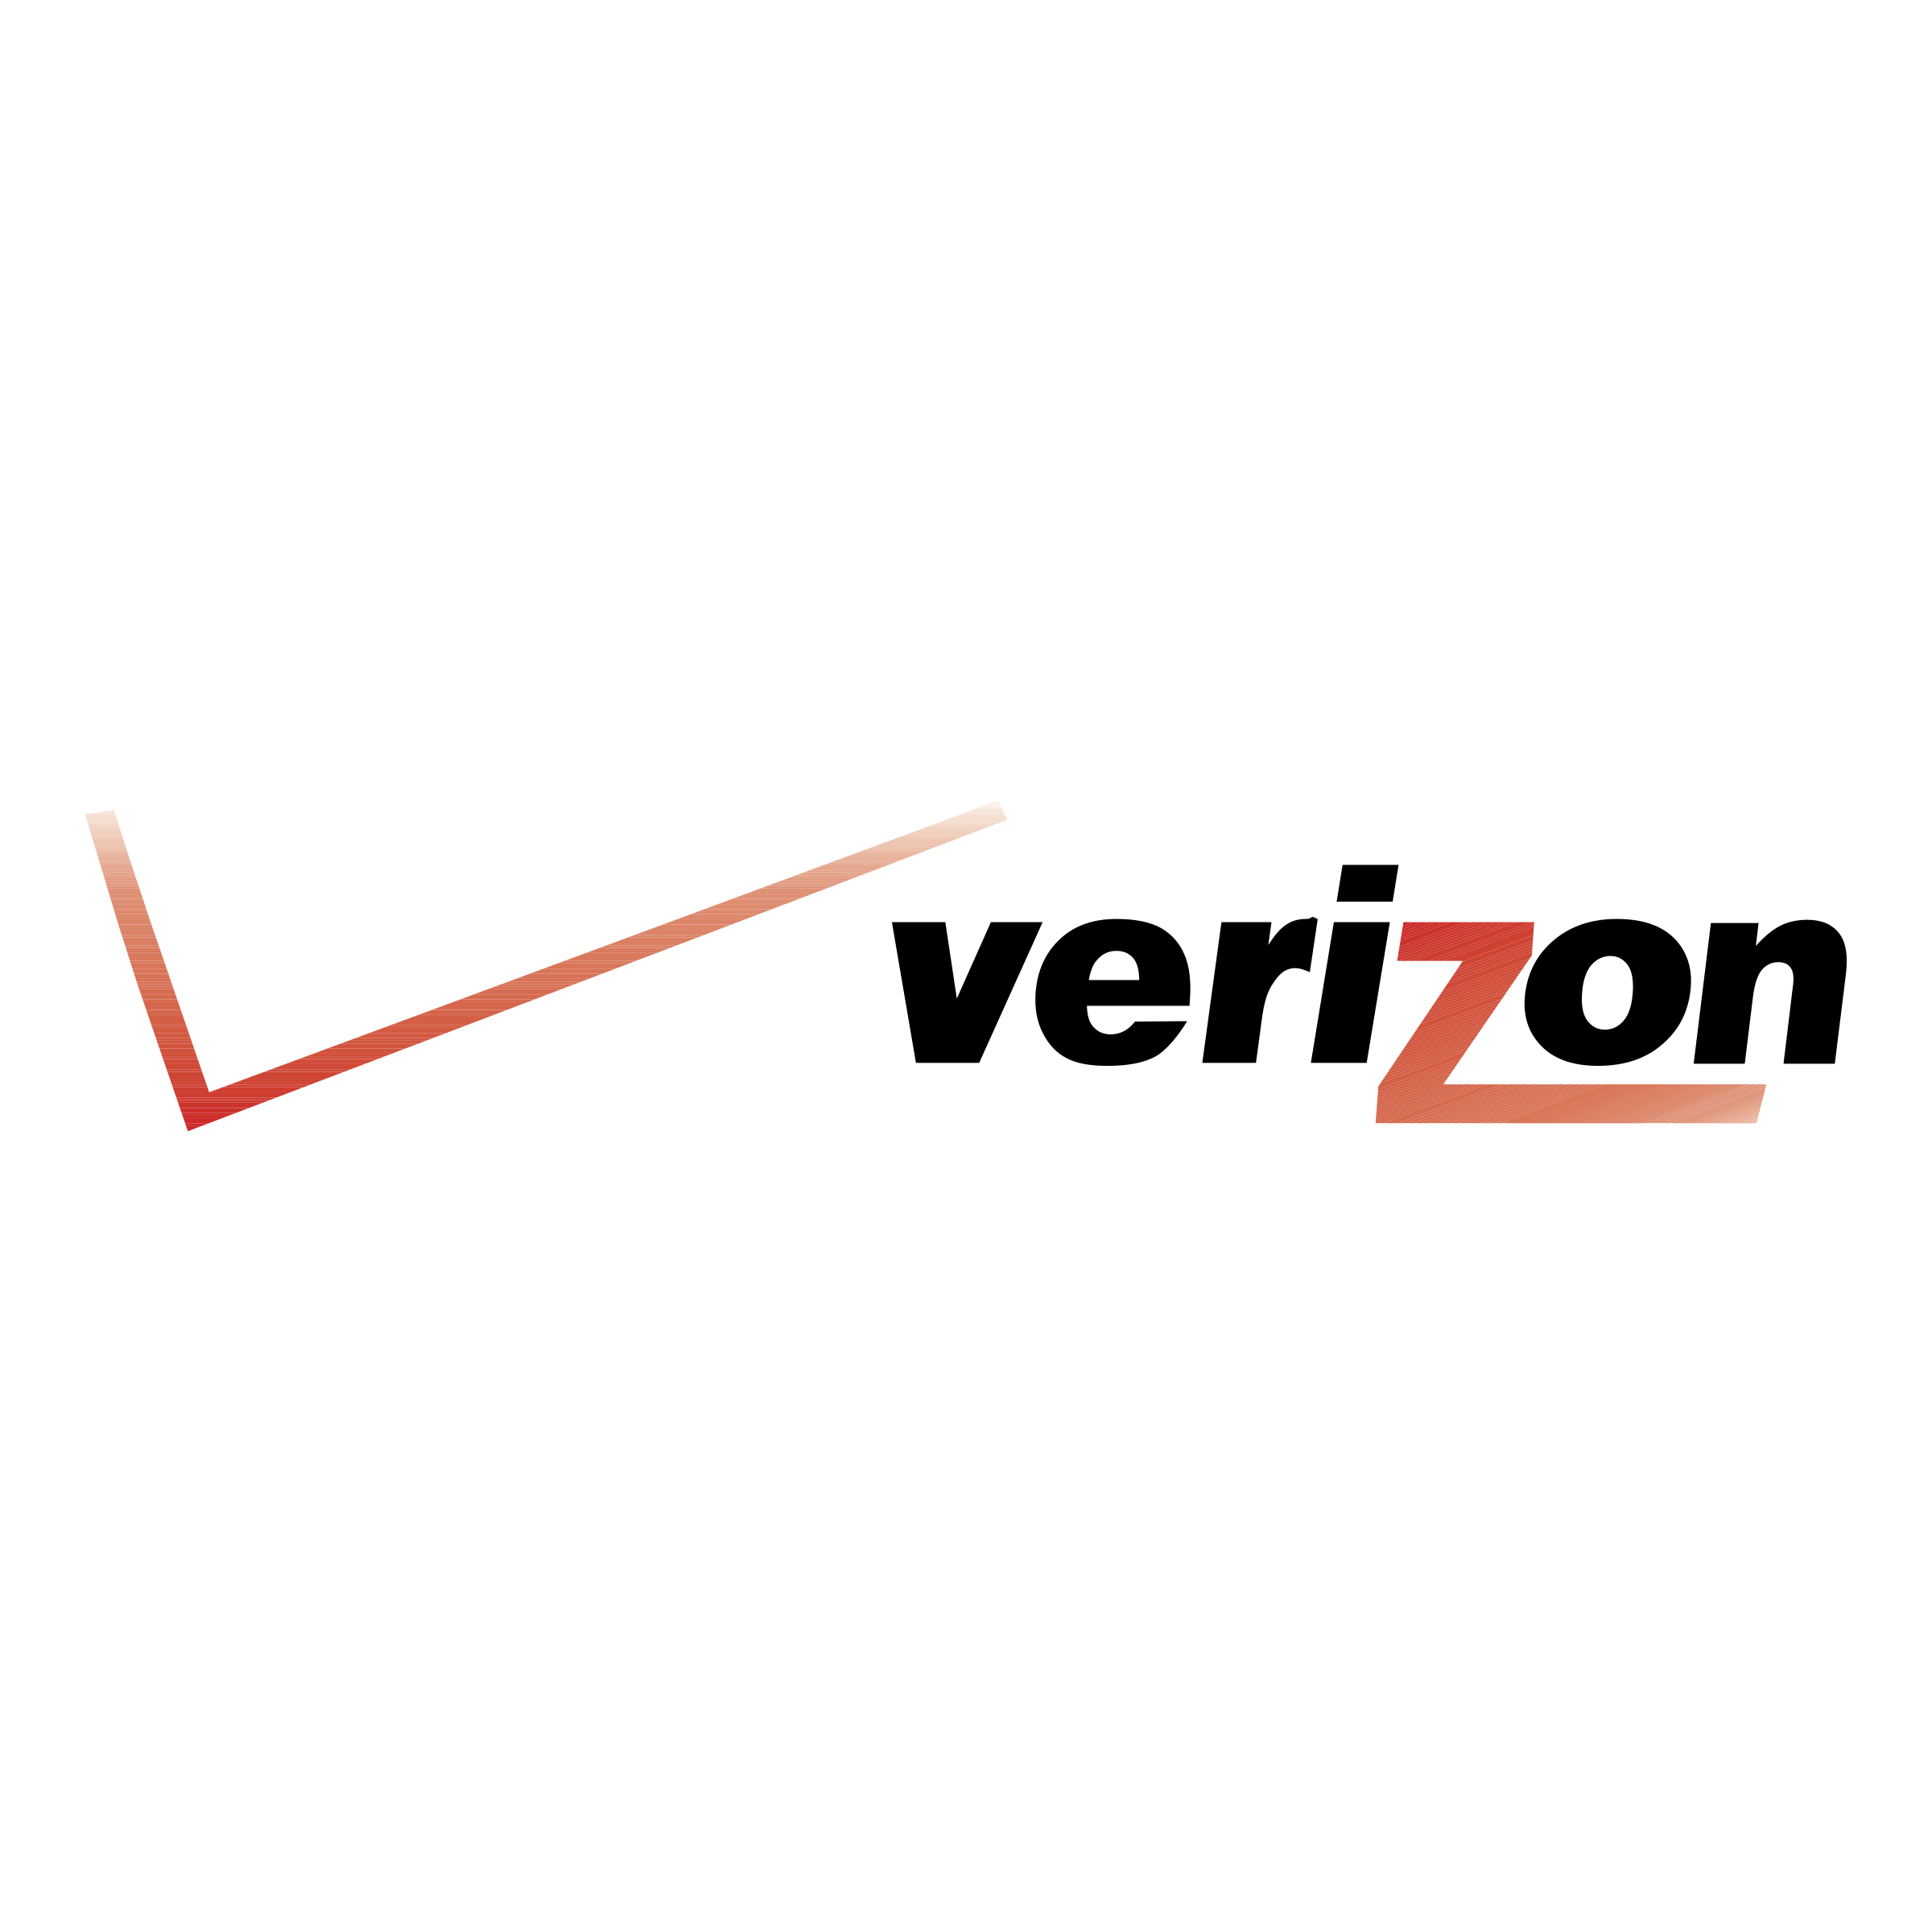 Verzion Logo - Verizon Logo PNG Transparent & SVG Vector - Freebie Supply